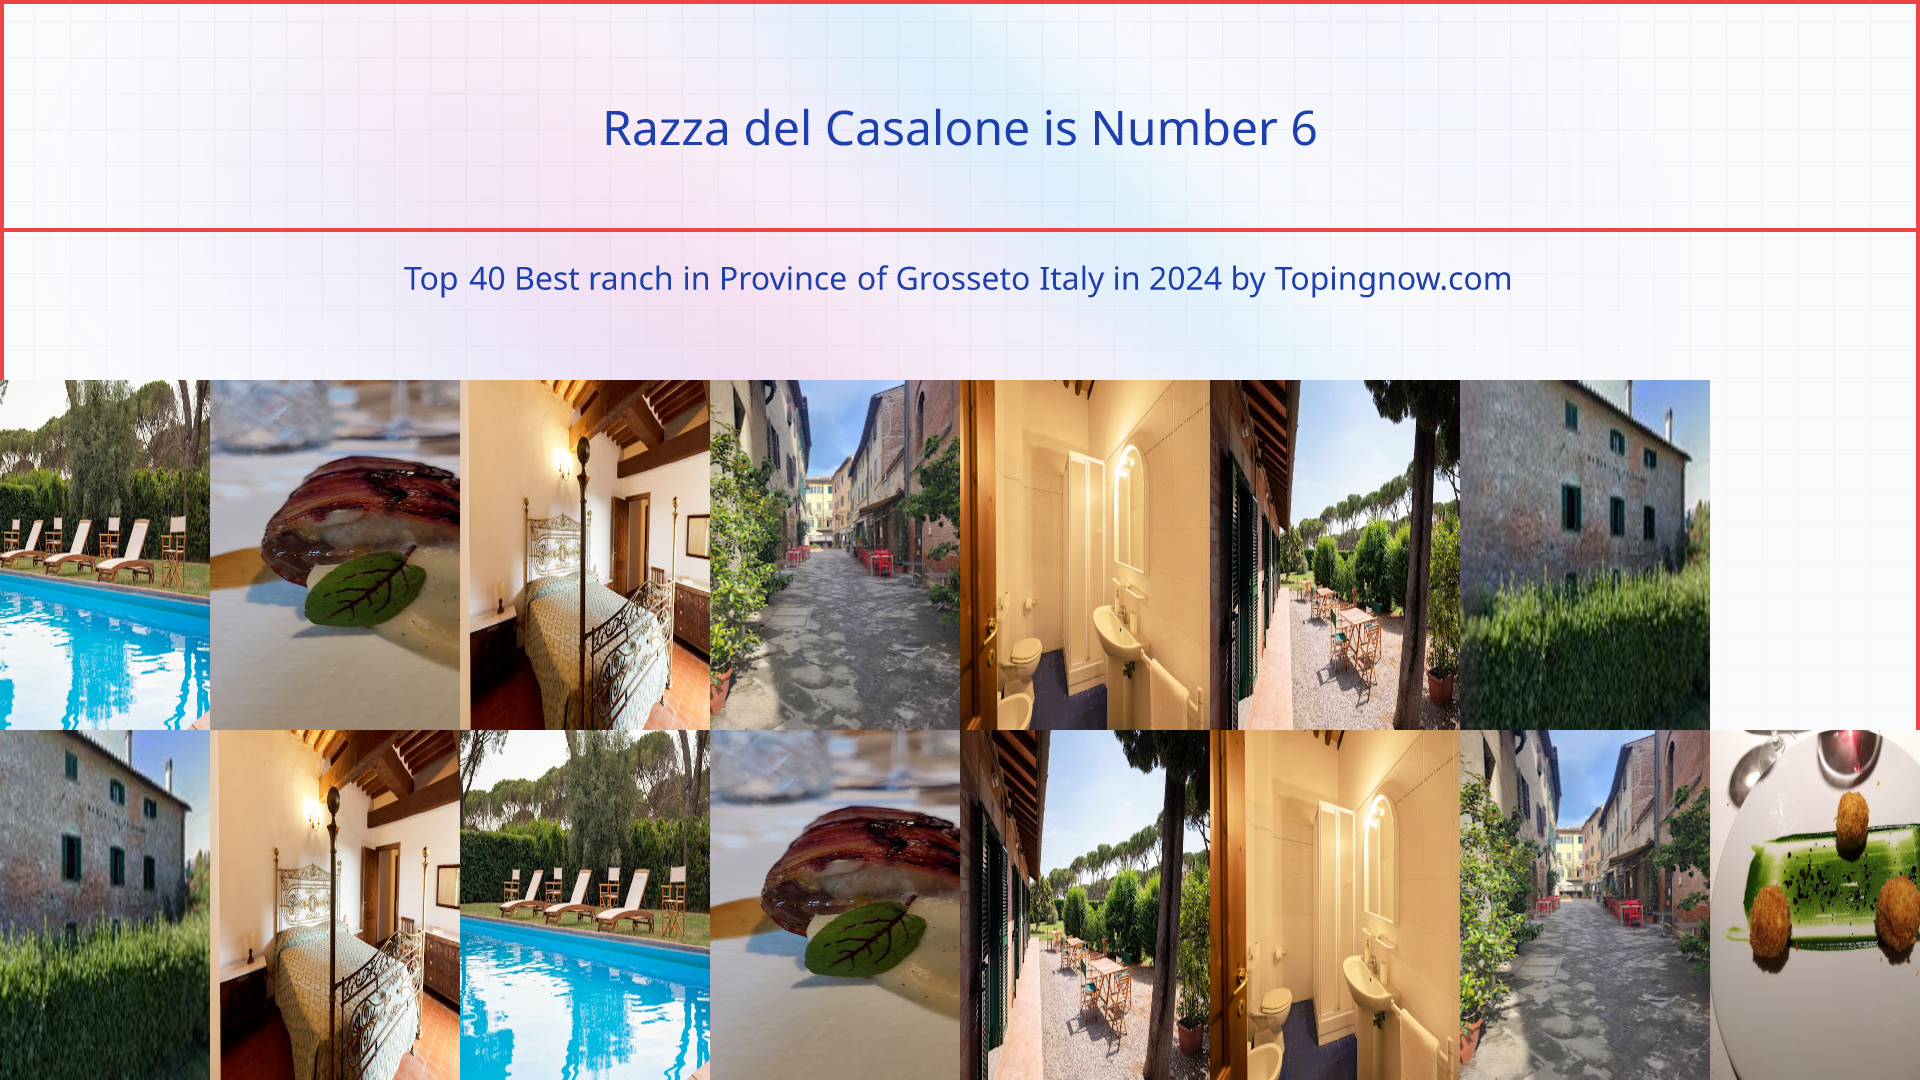 Razza del Casalone: Top 40 Best ranch in Province of Grosseto Italy in 2024